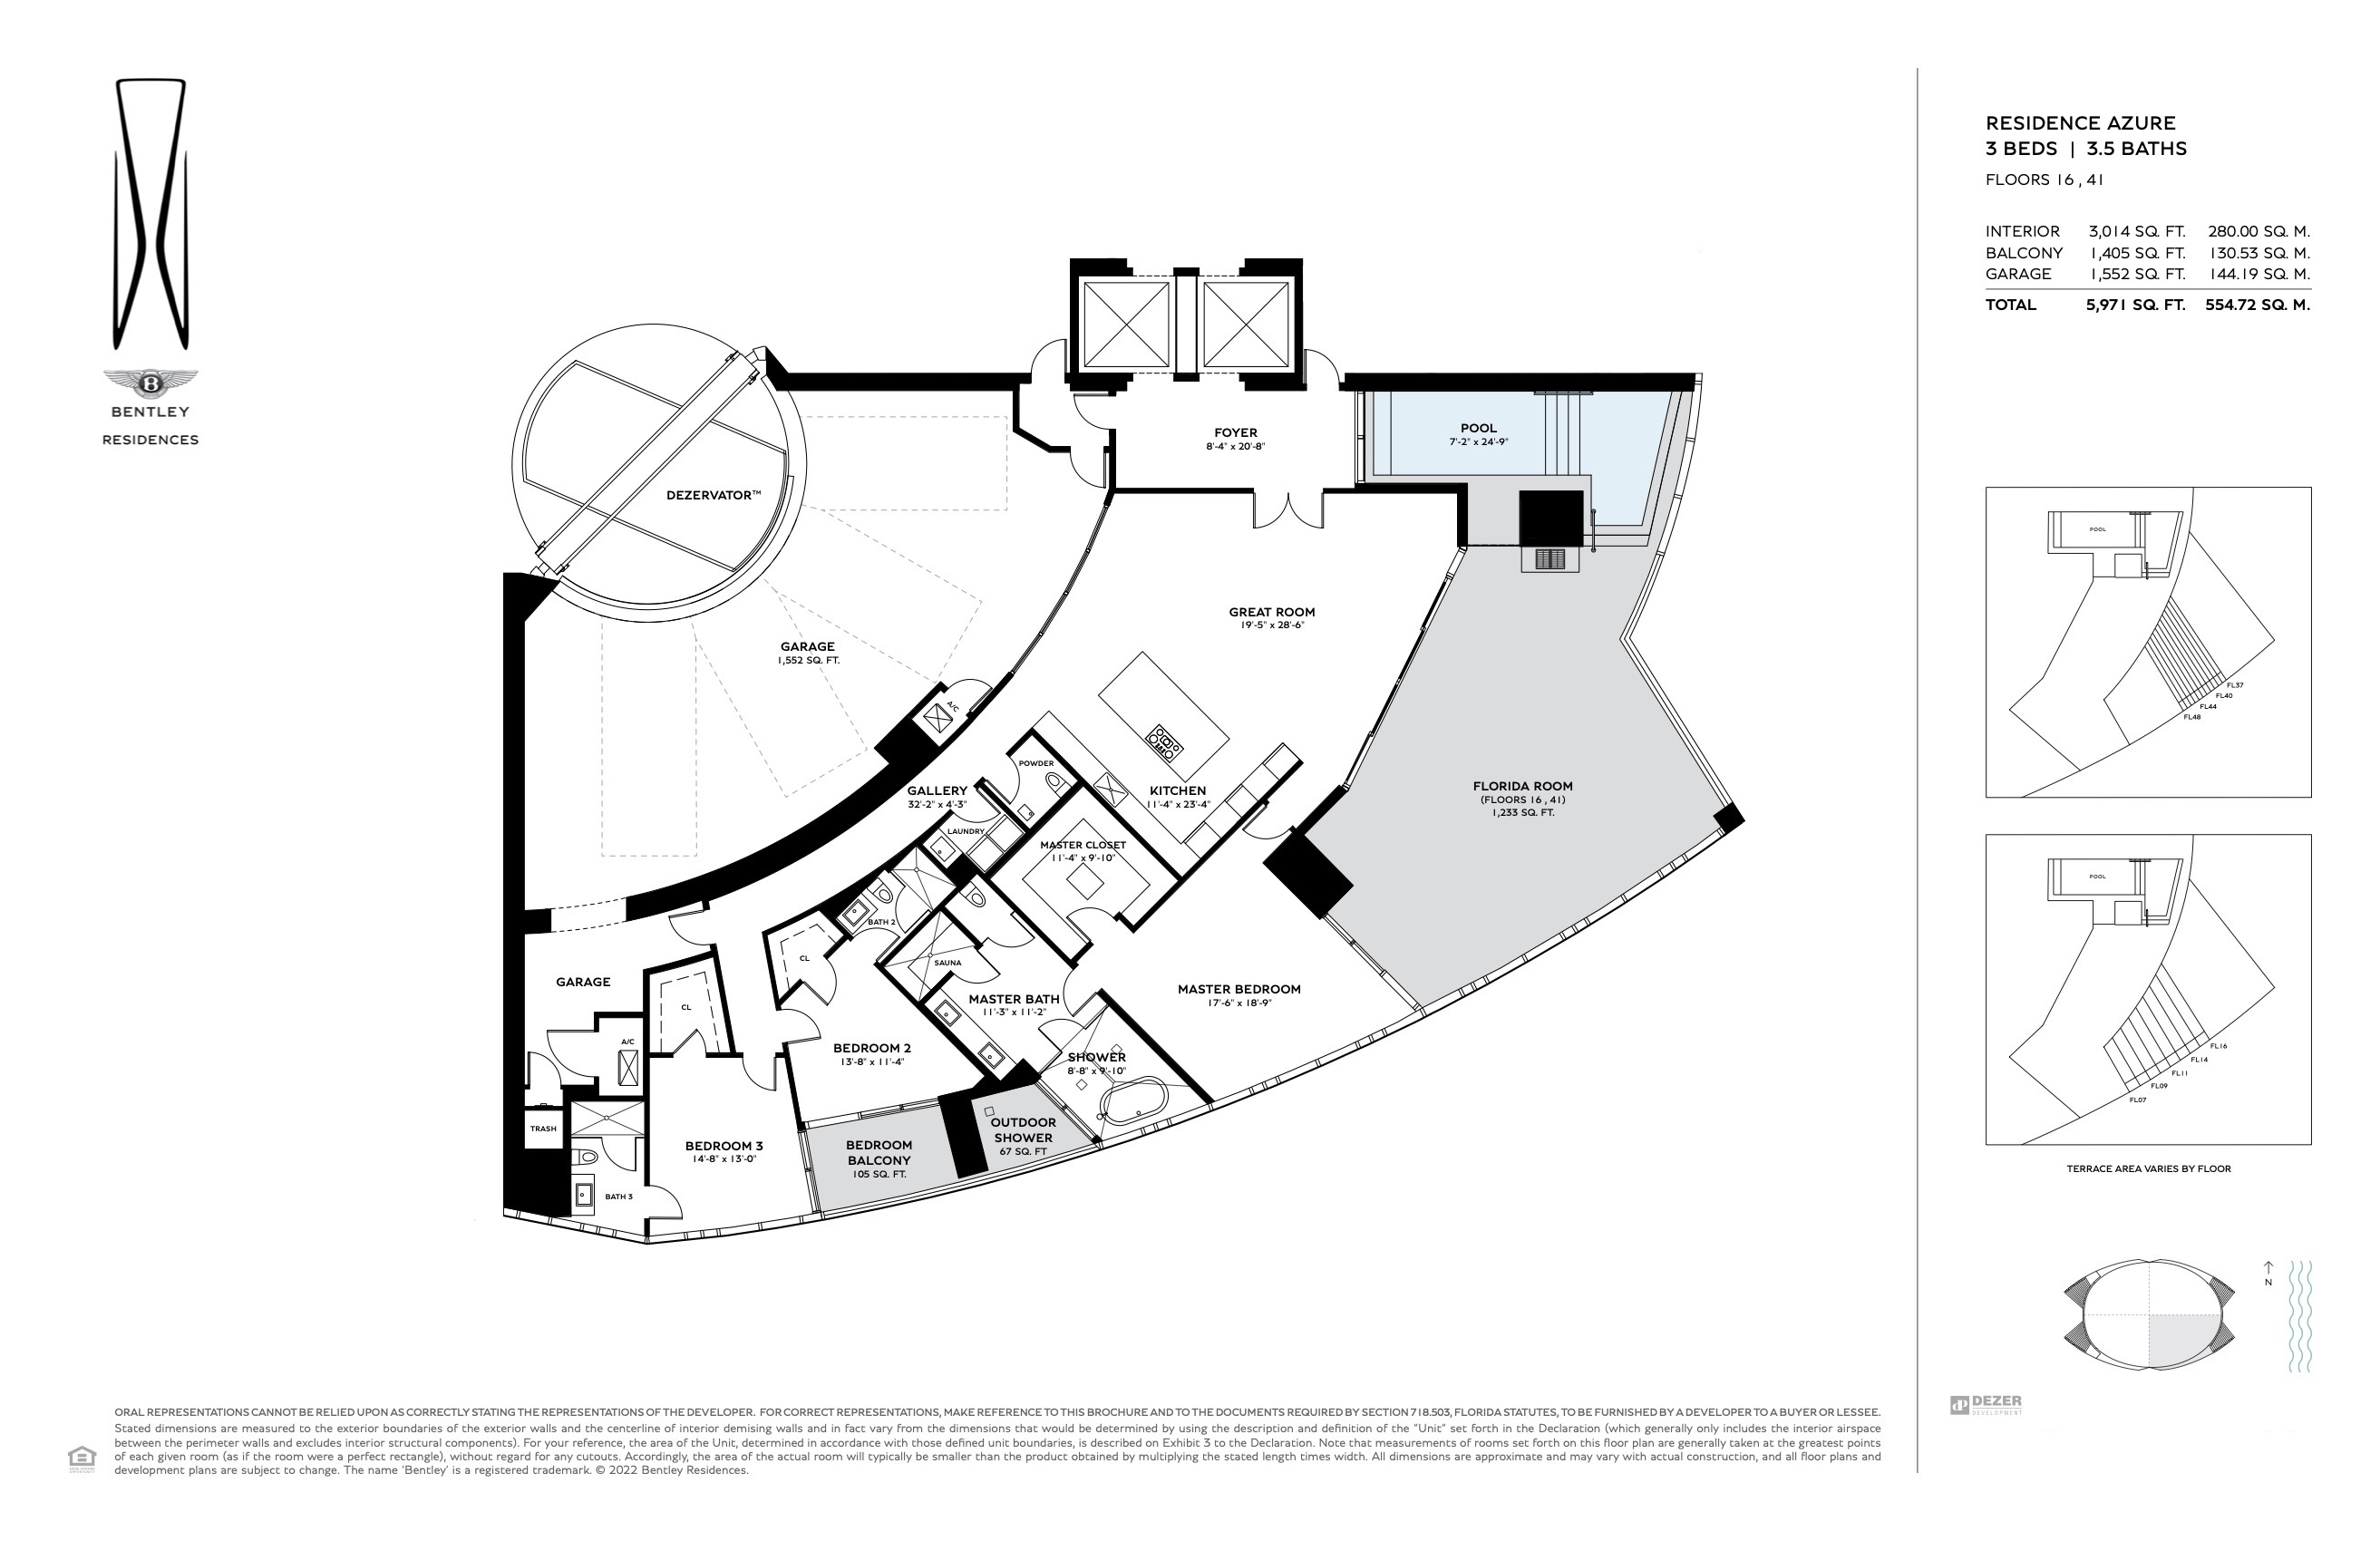 Floor Plan for The Bentley Residences Sunny Isles Floorplans, Residence Azure 